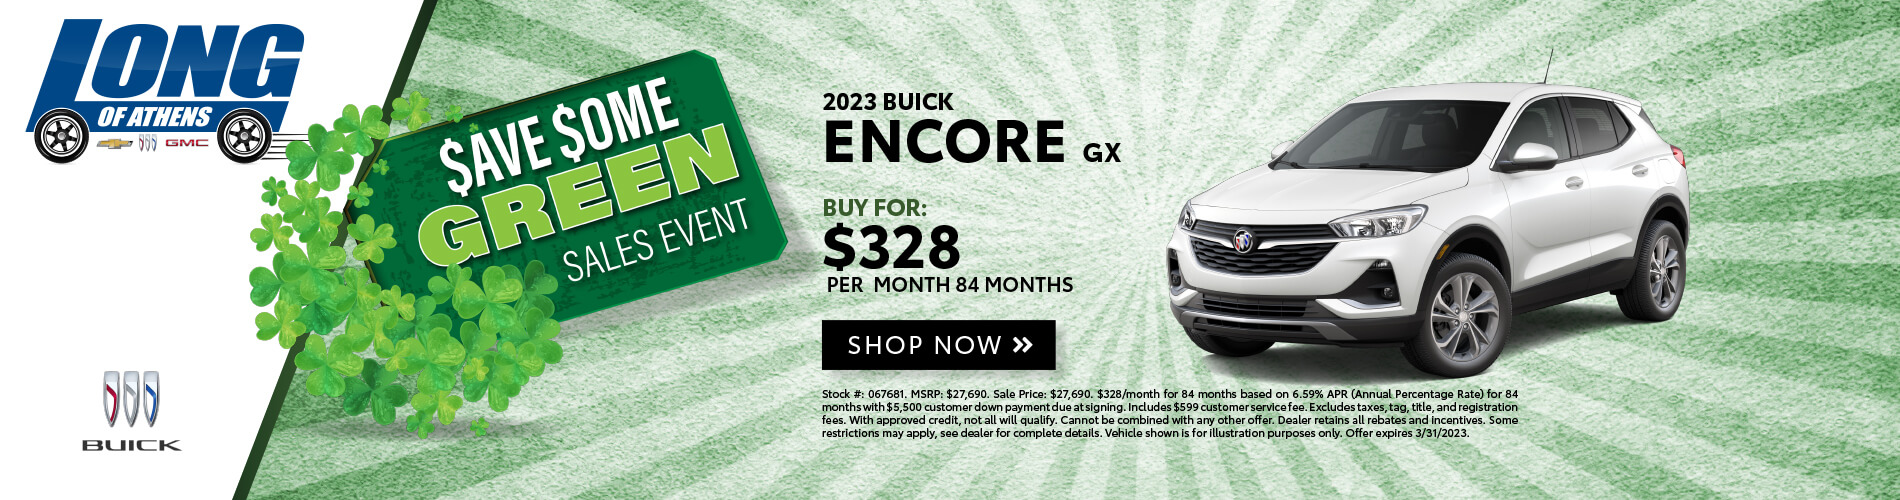 2023 Buick Encore Gx